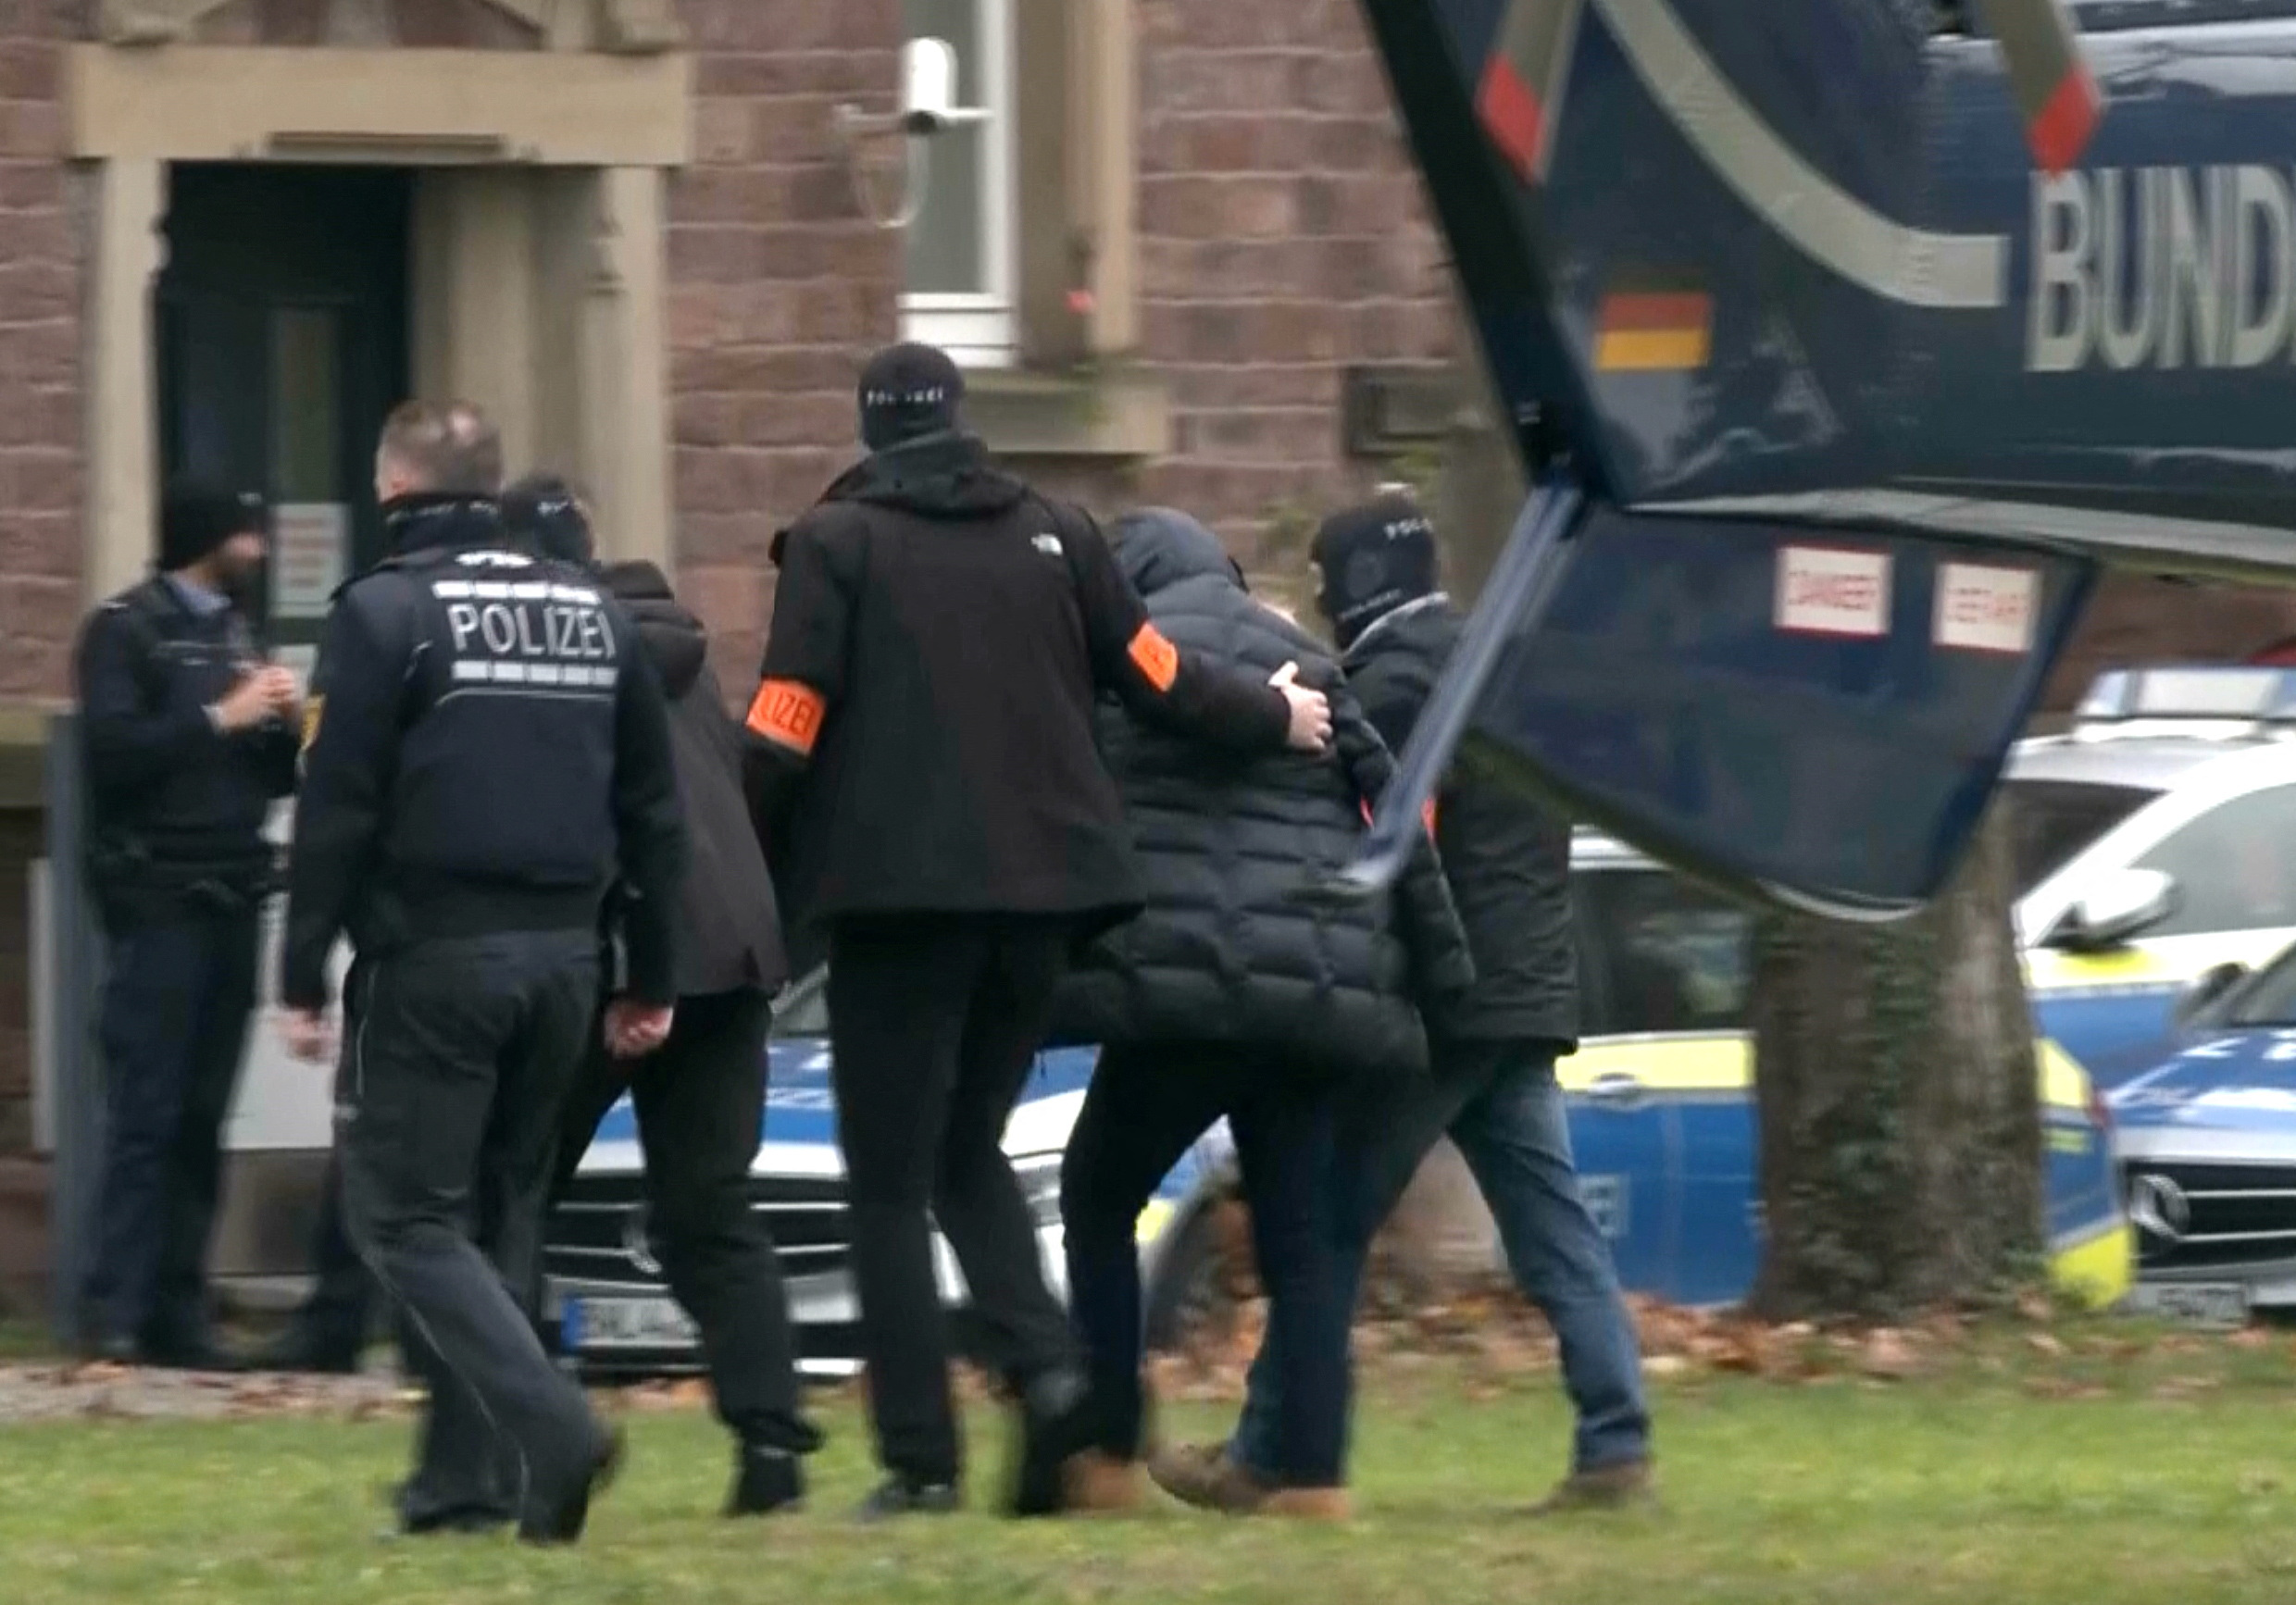 Raids took place across Germany. /Tilman Blasshofer/Reuters TV via Reuters